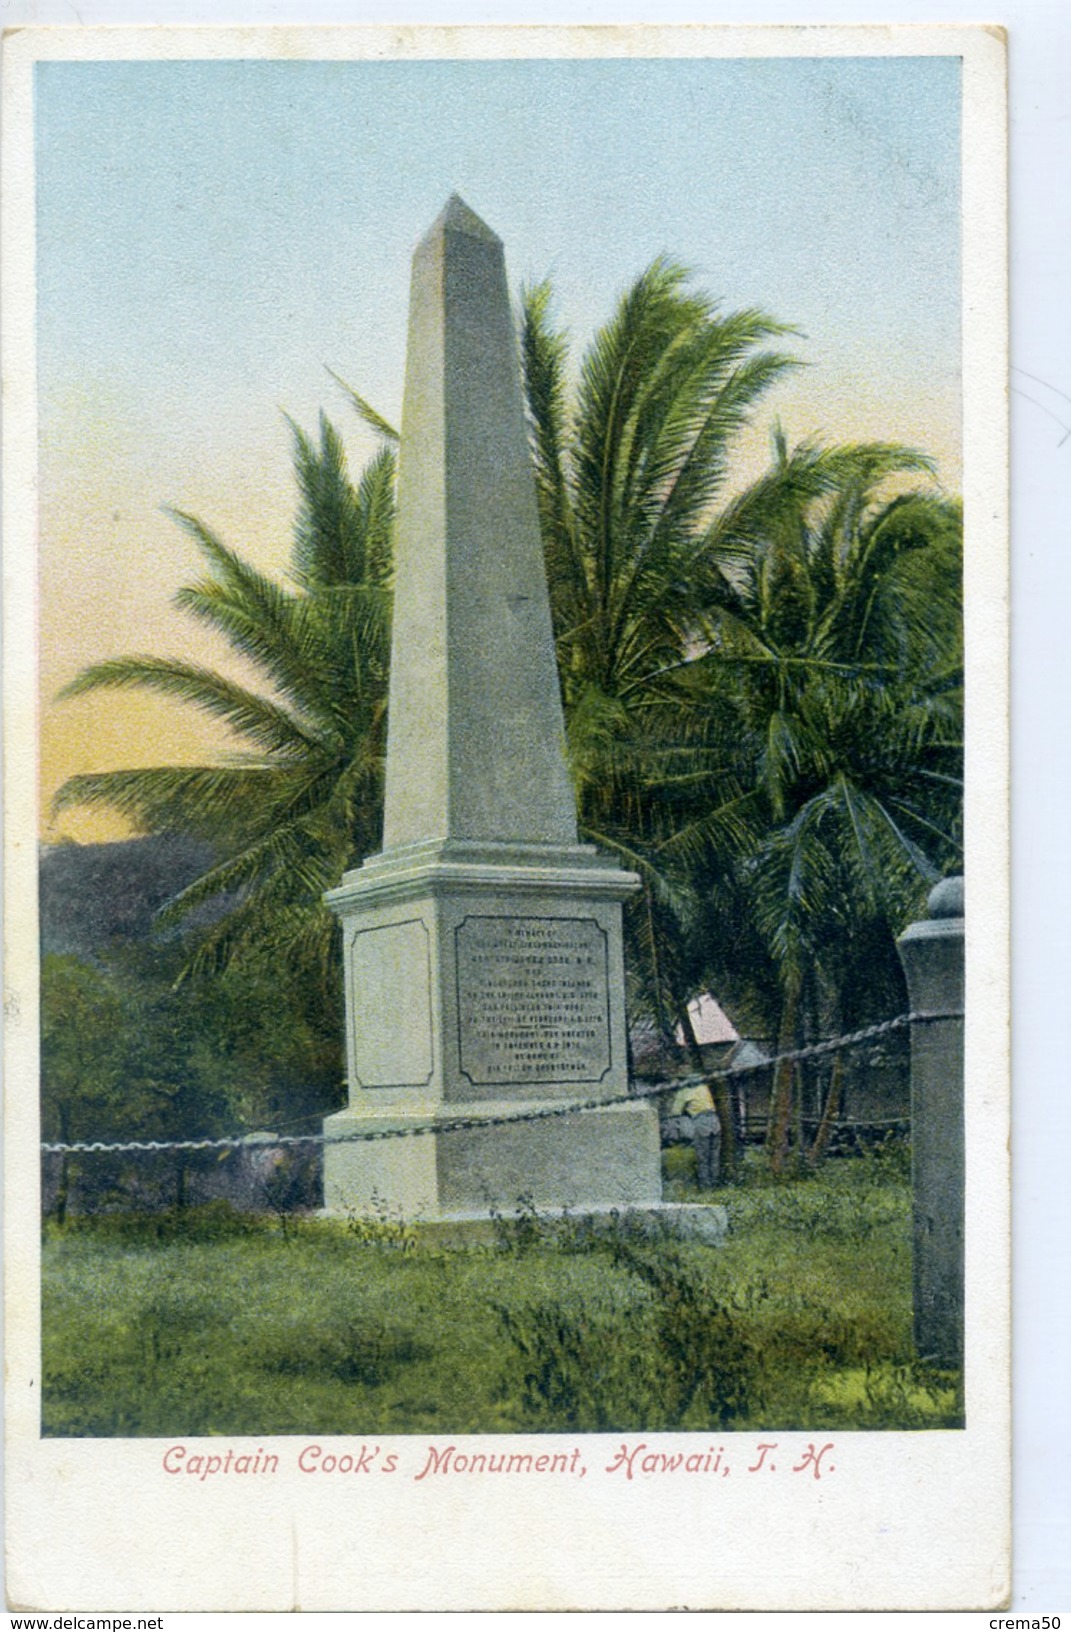 CAPTAIN COOK'S MONUMENT - - Honolulu